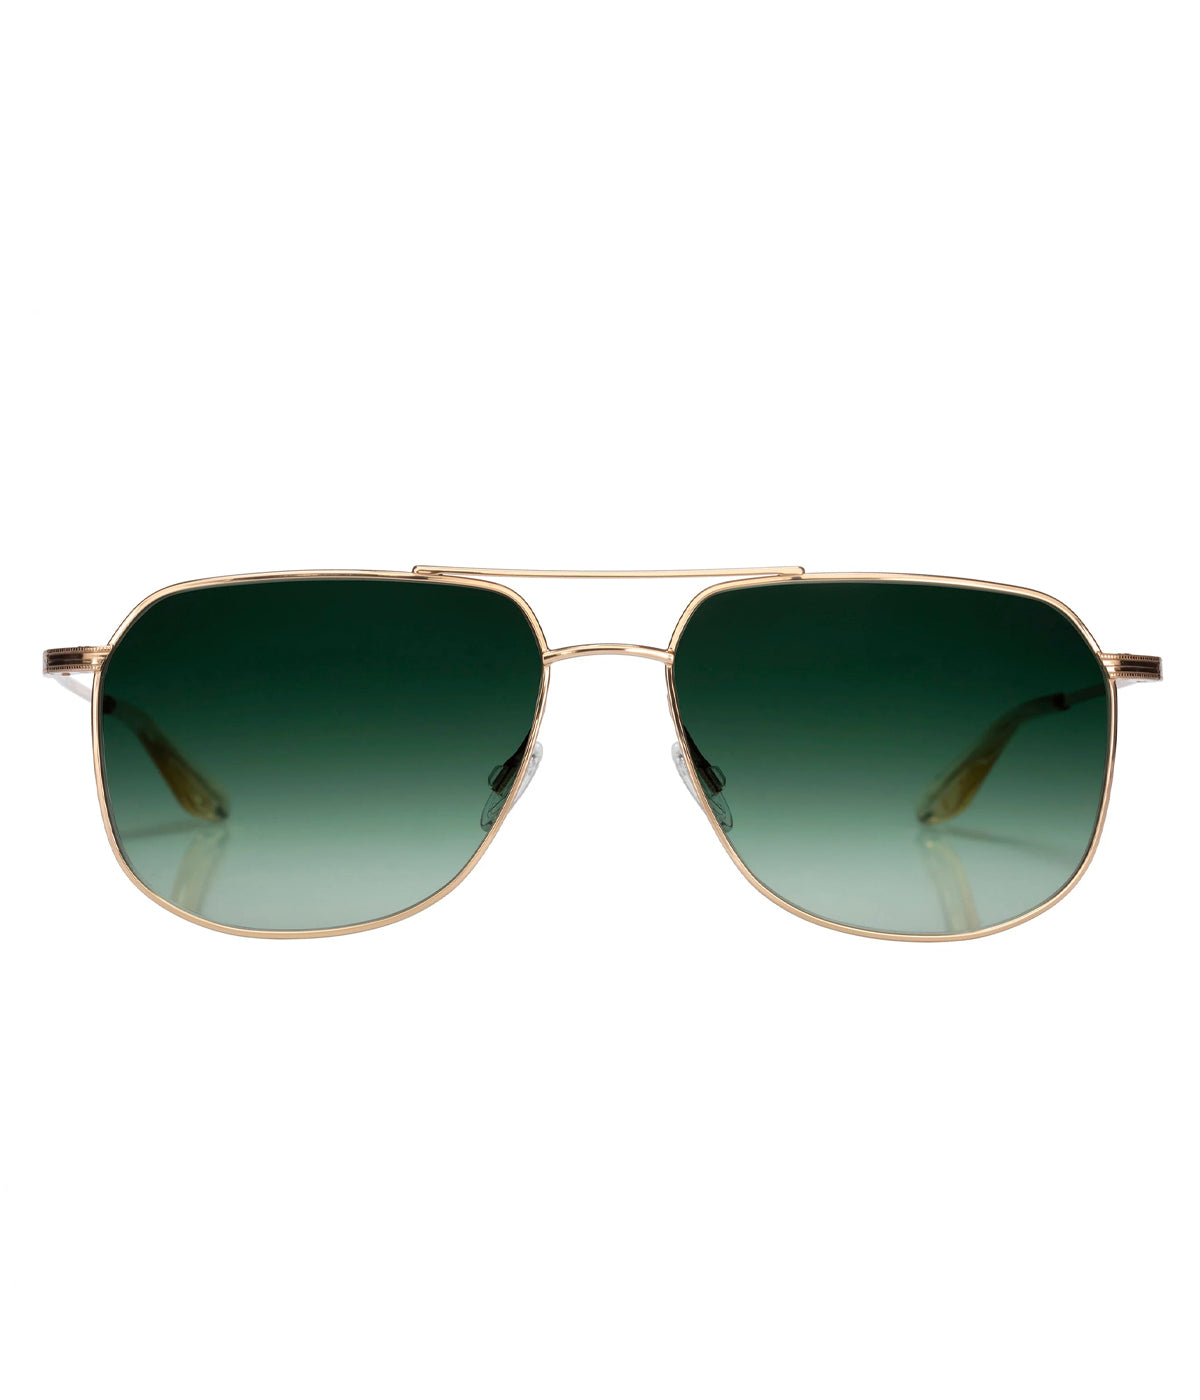 Javeline Sunglasses in Golden Green